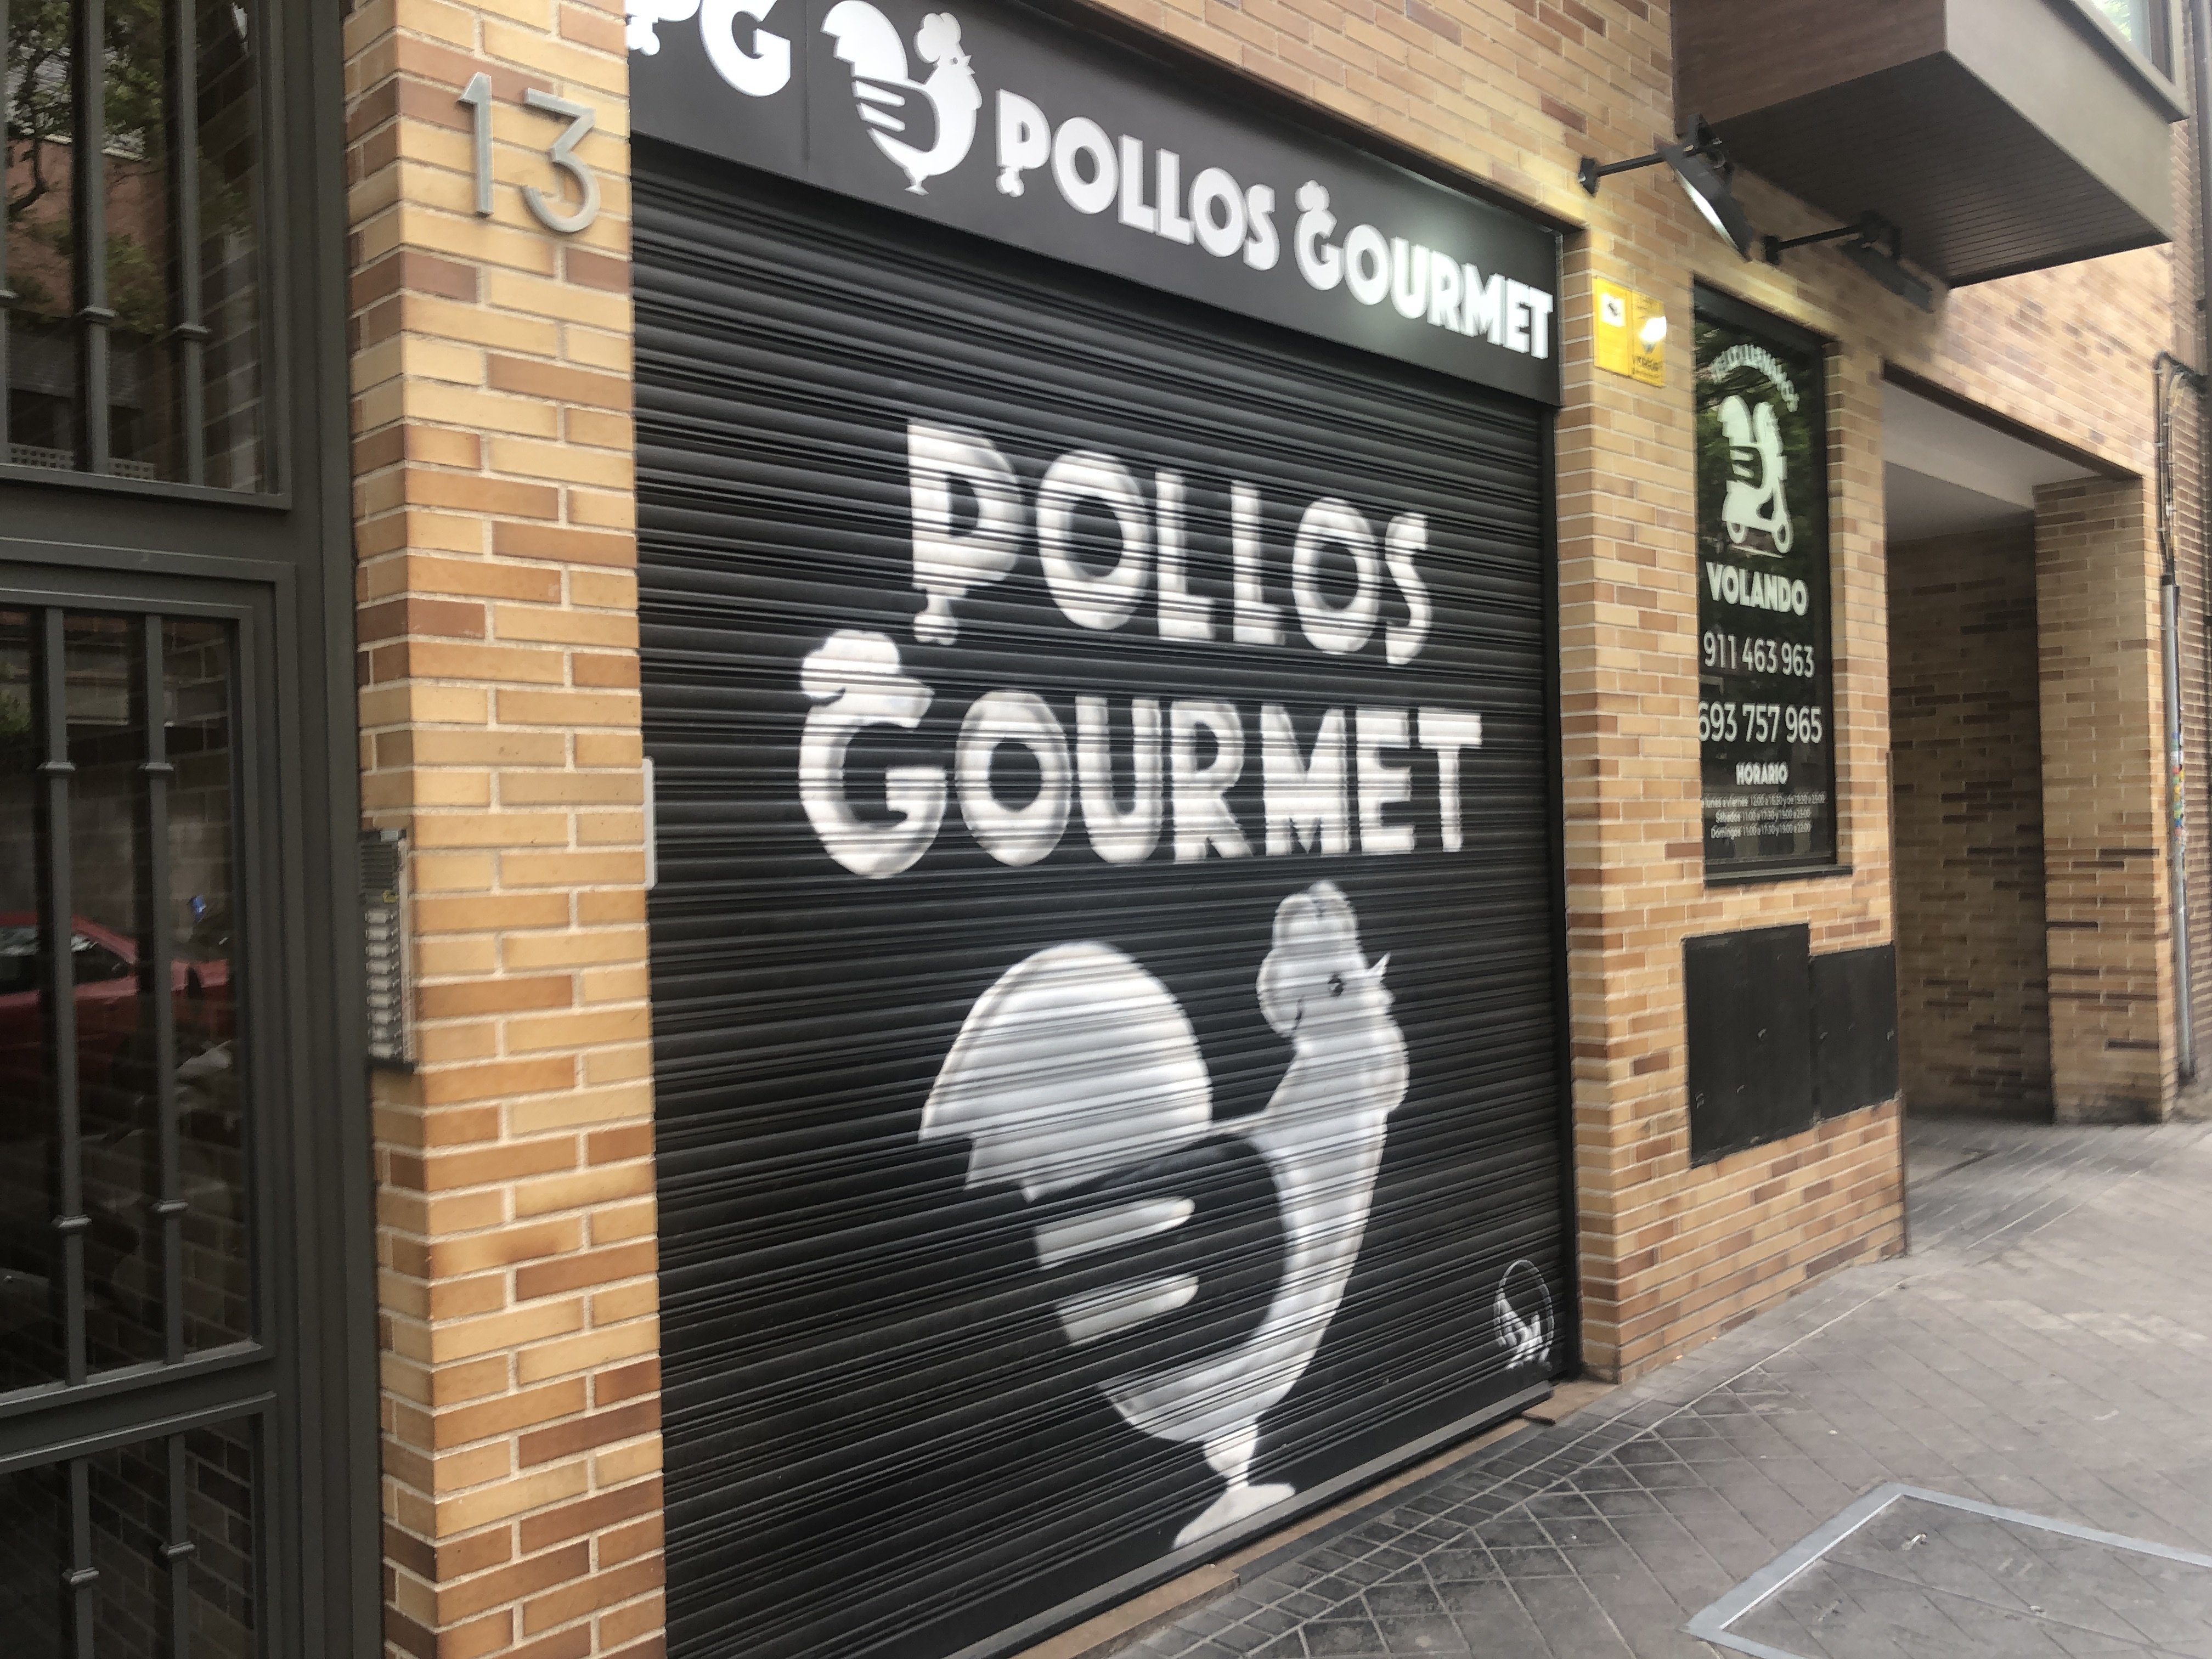 PG - Pollos Gourmet